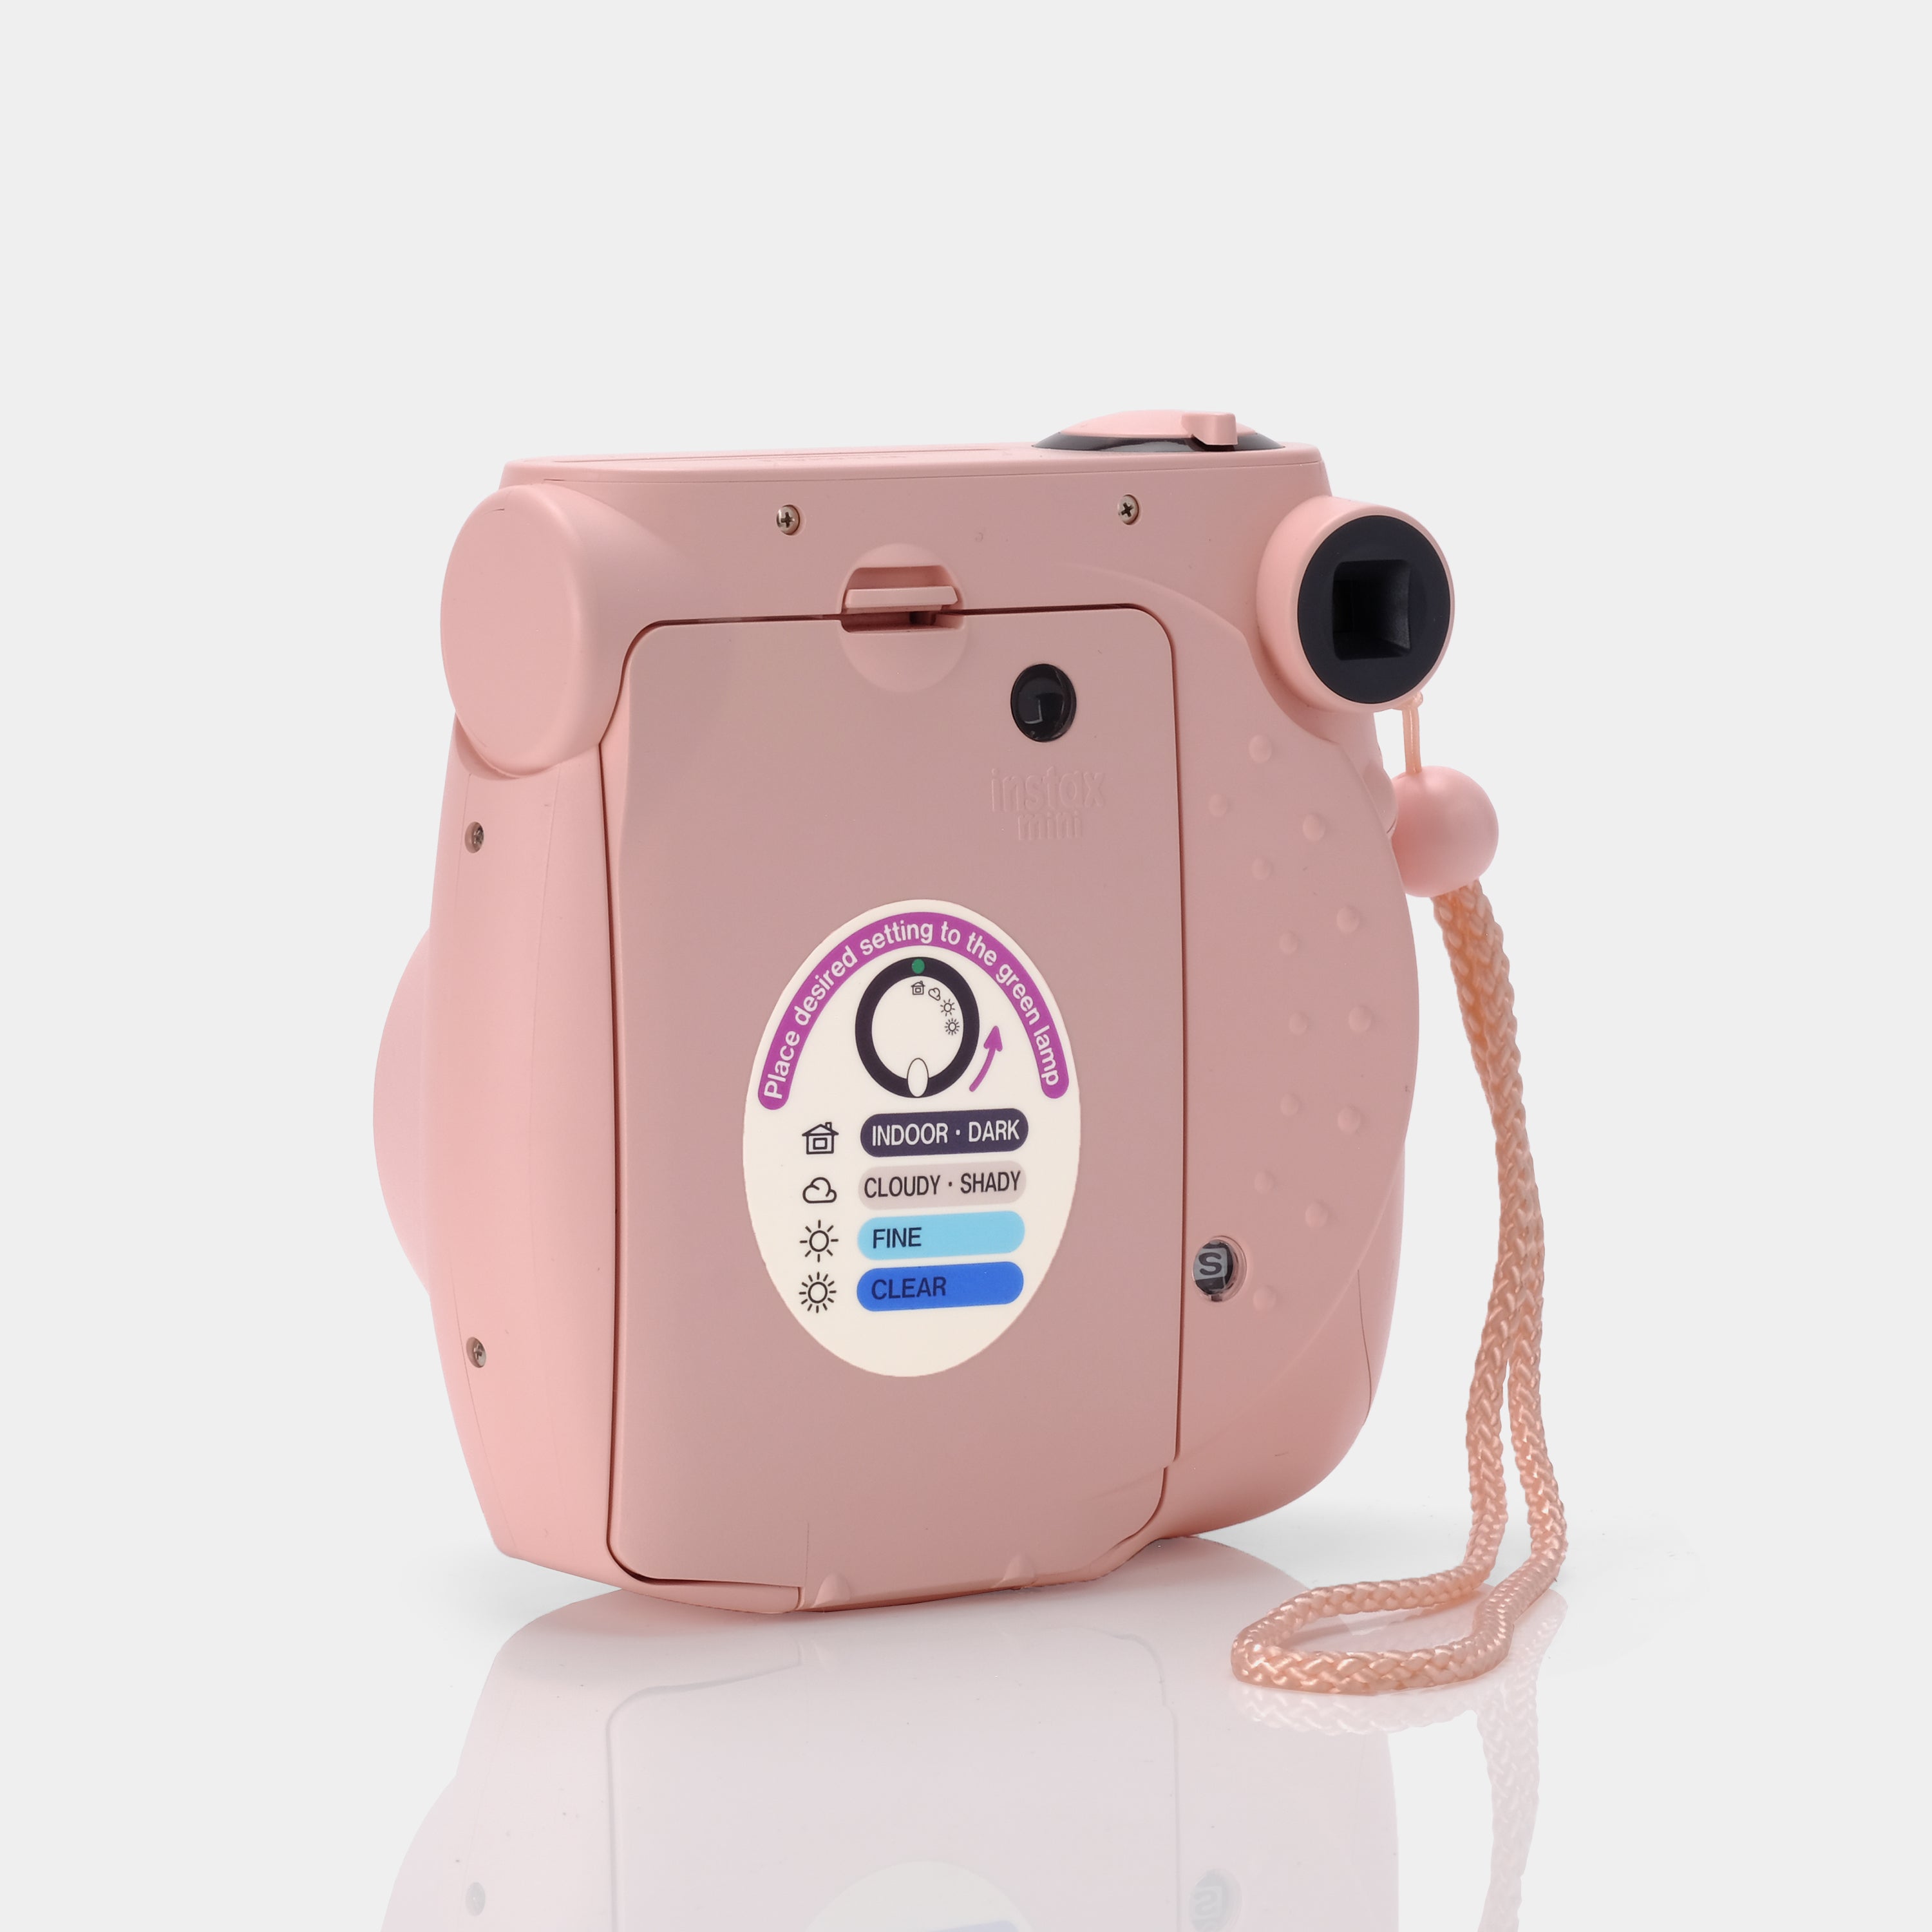 Fujifilm Instax Mini 7S Pink Instant Film Camera With Pink Bag - Refurbished